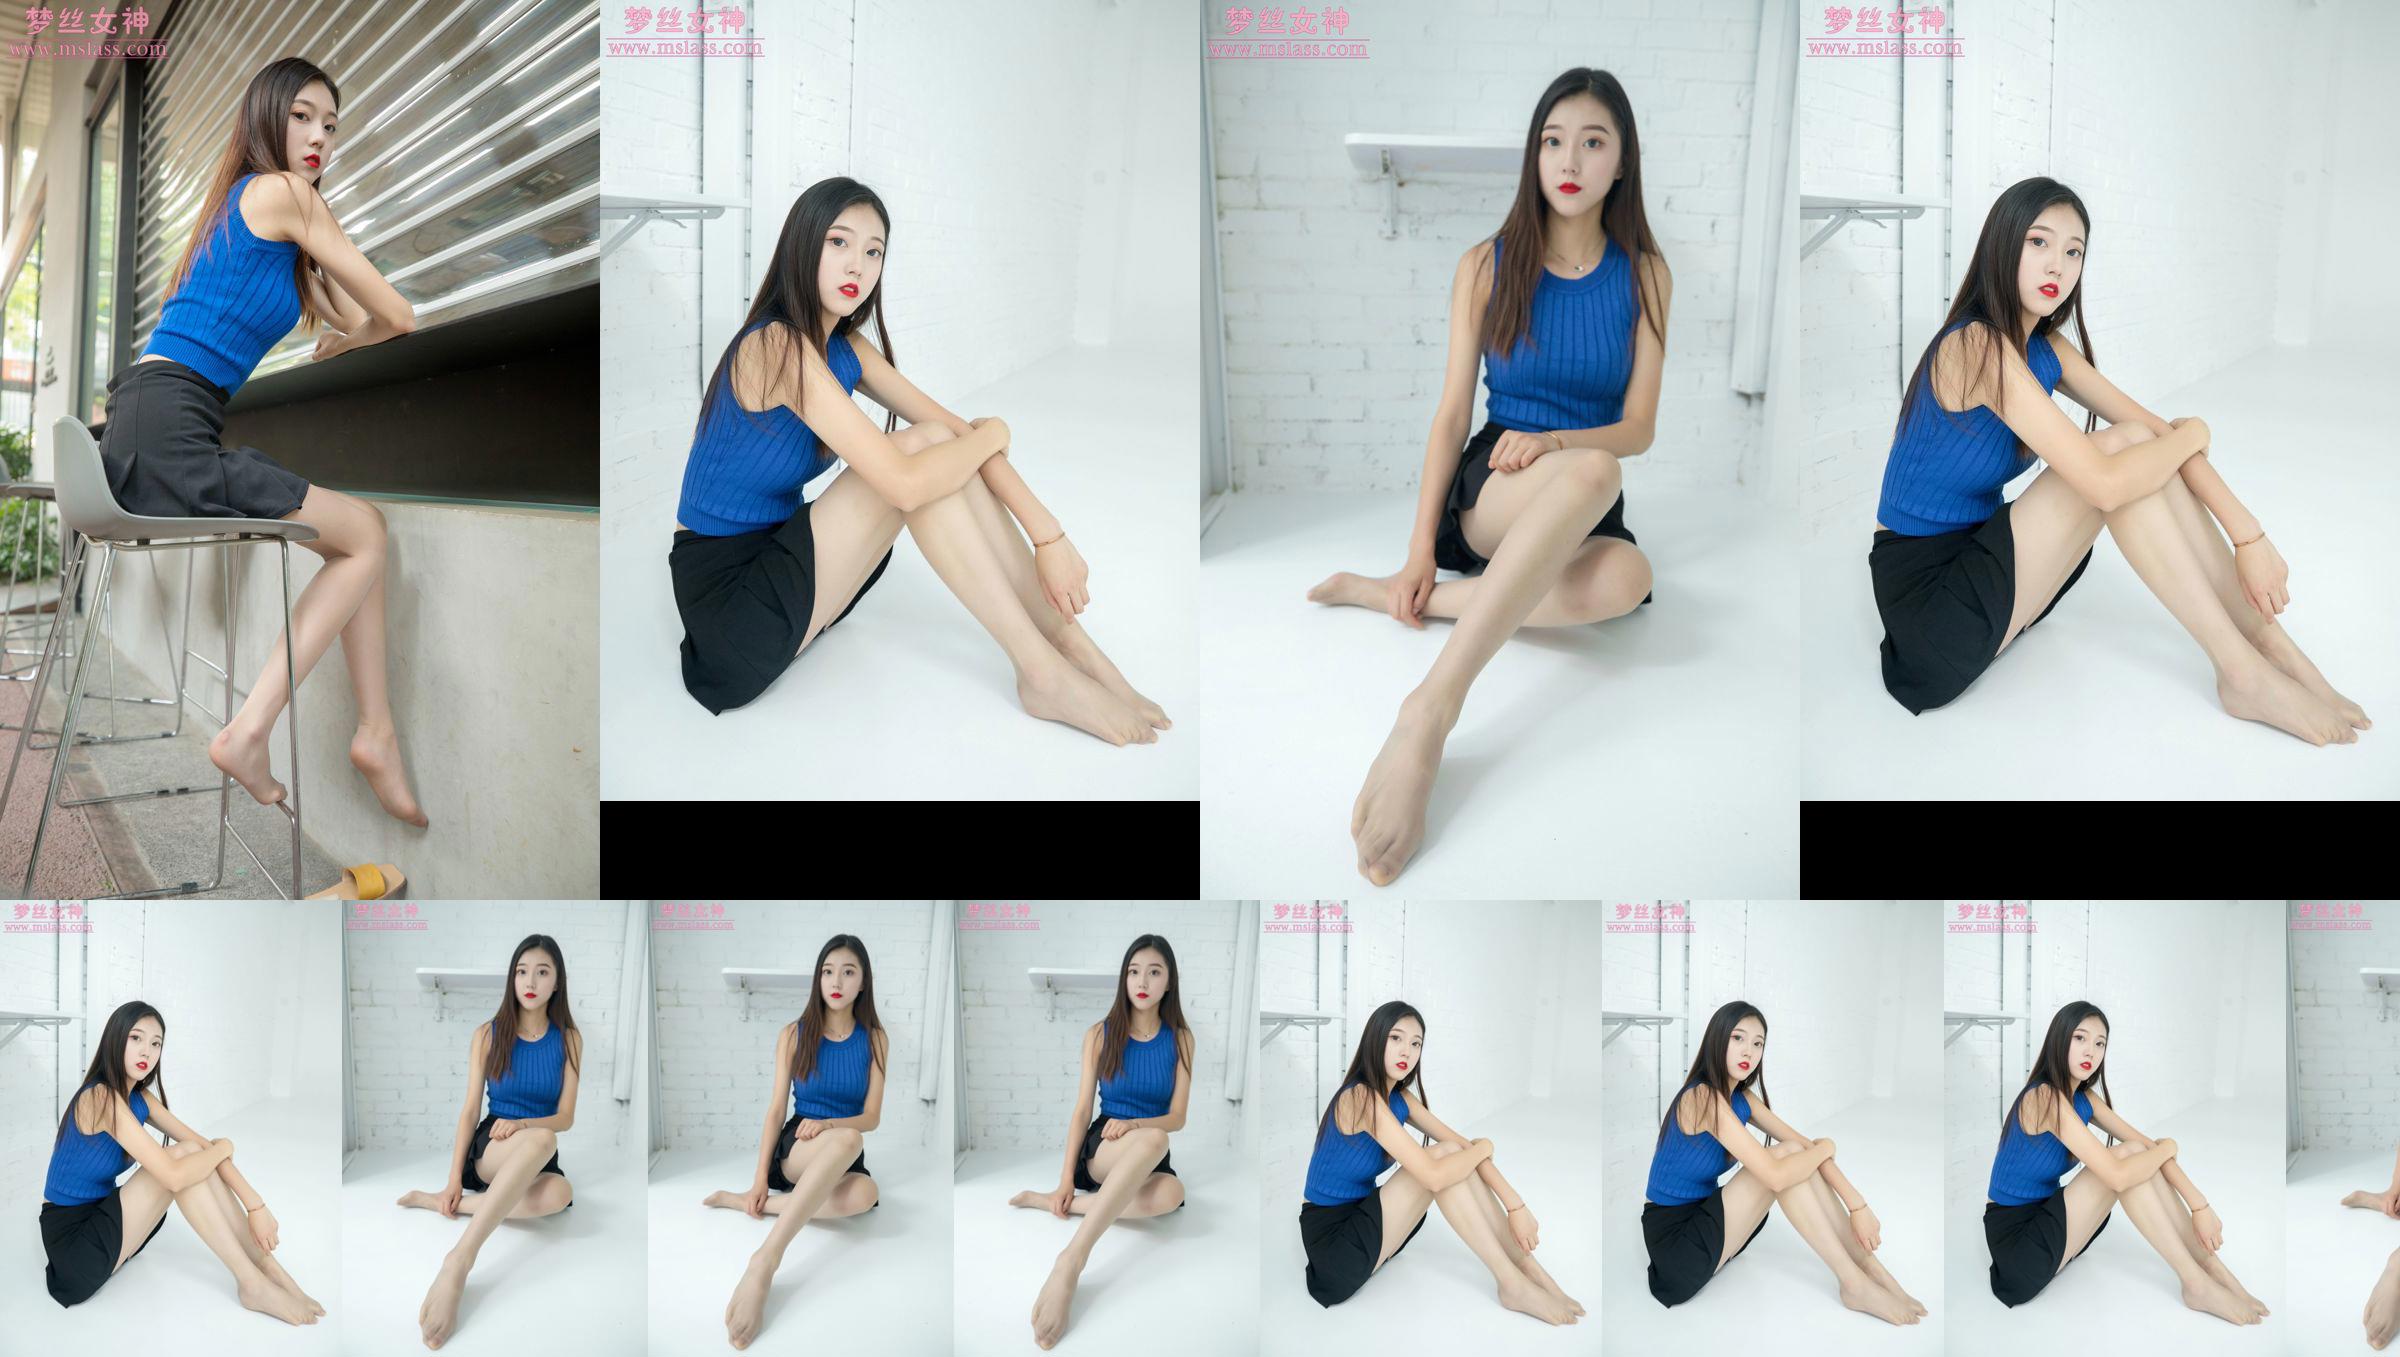 [MSLASS] Shu Lei Art Space Stockings Beautiful Legs No.37fde5 Page 1